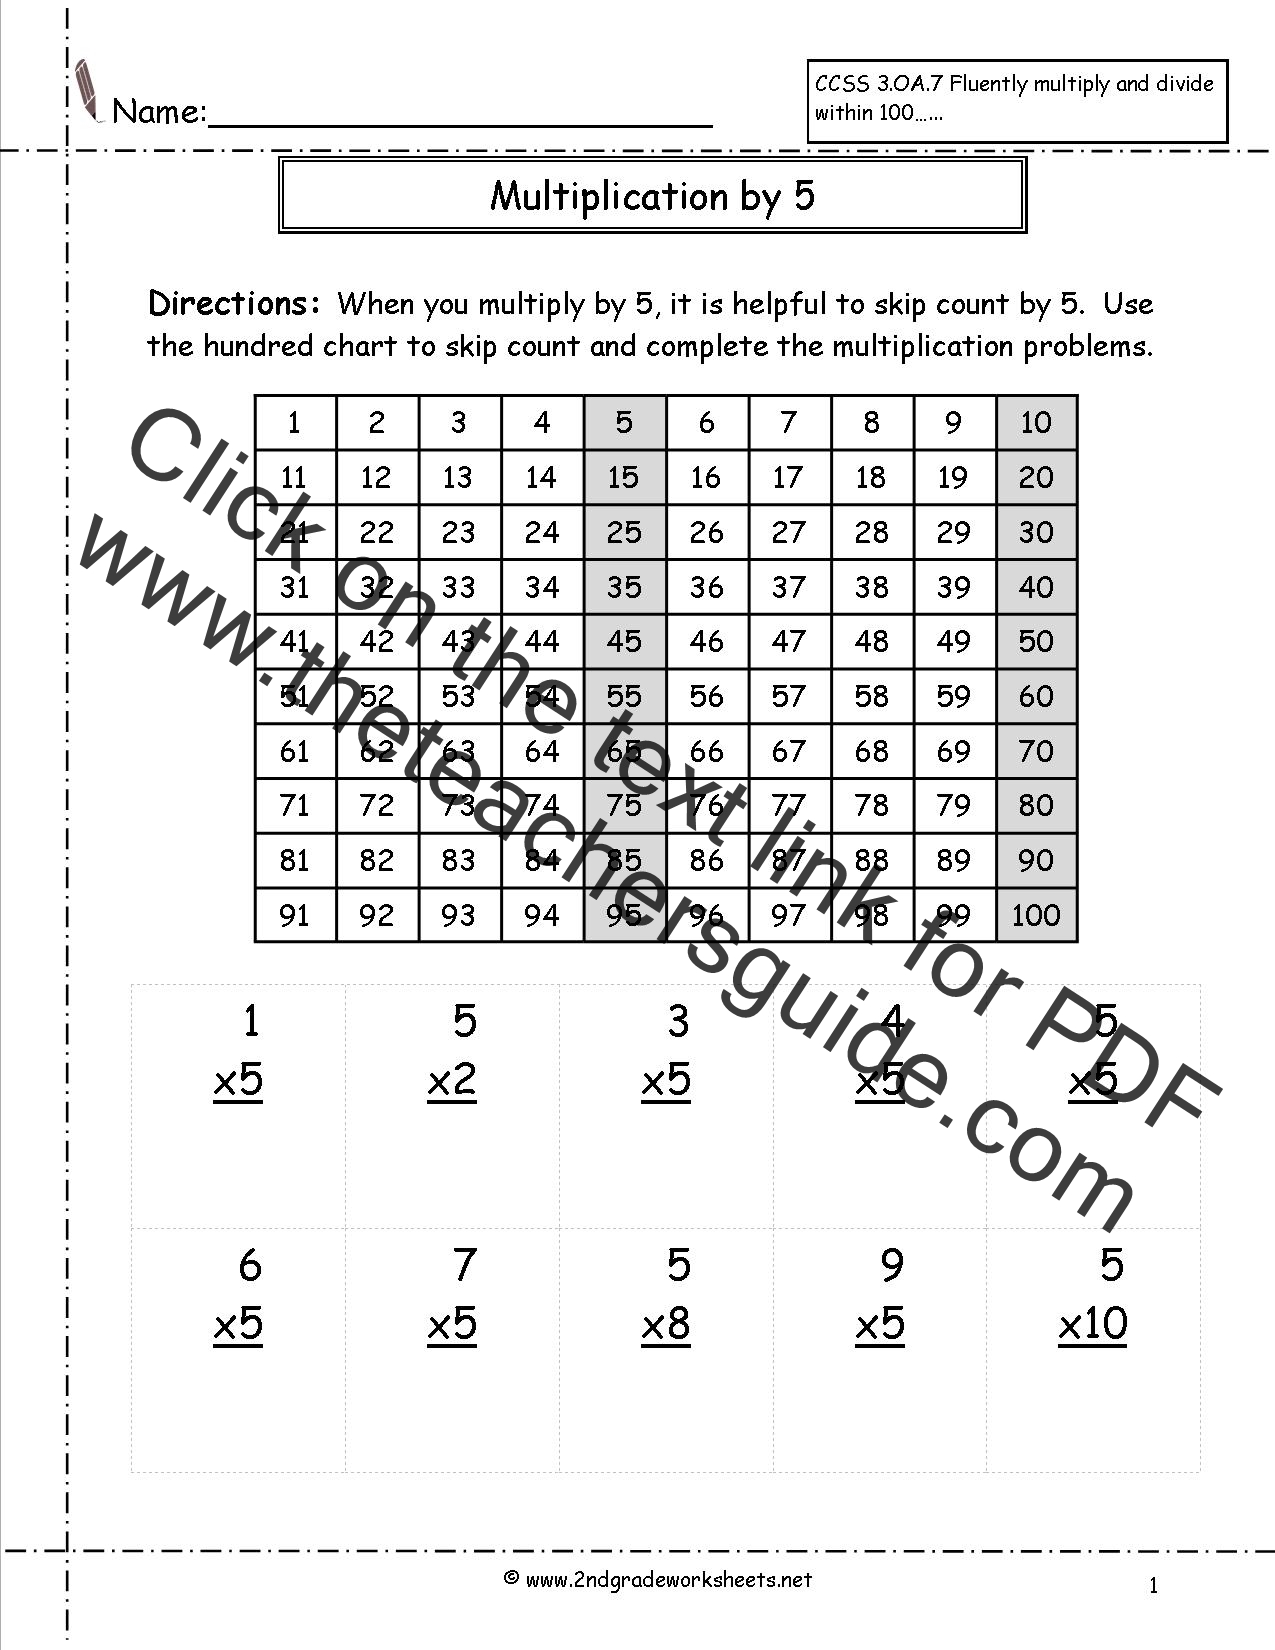 second-grade-multiplication-worksheets-free-printable